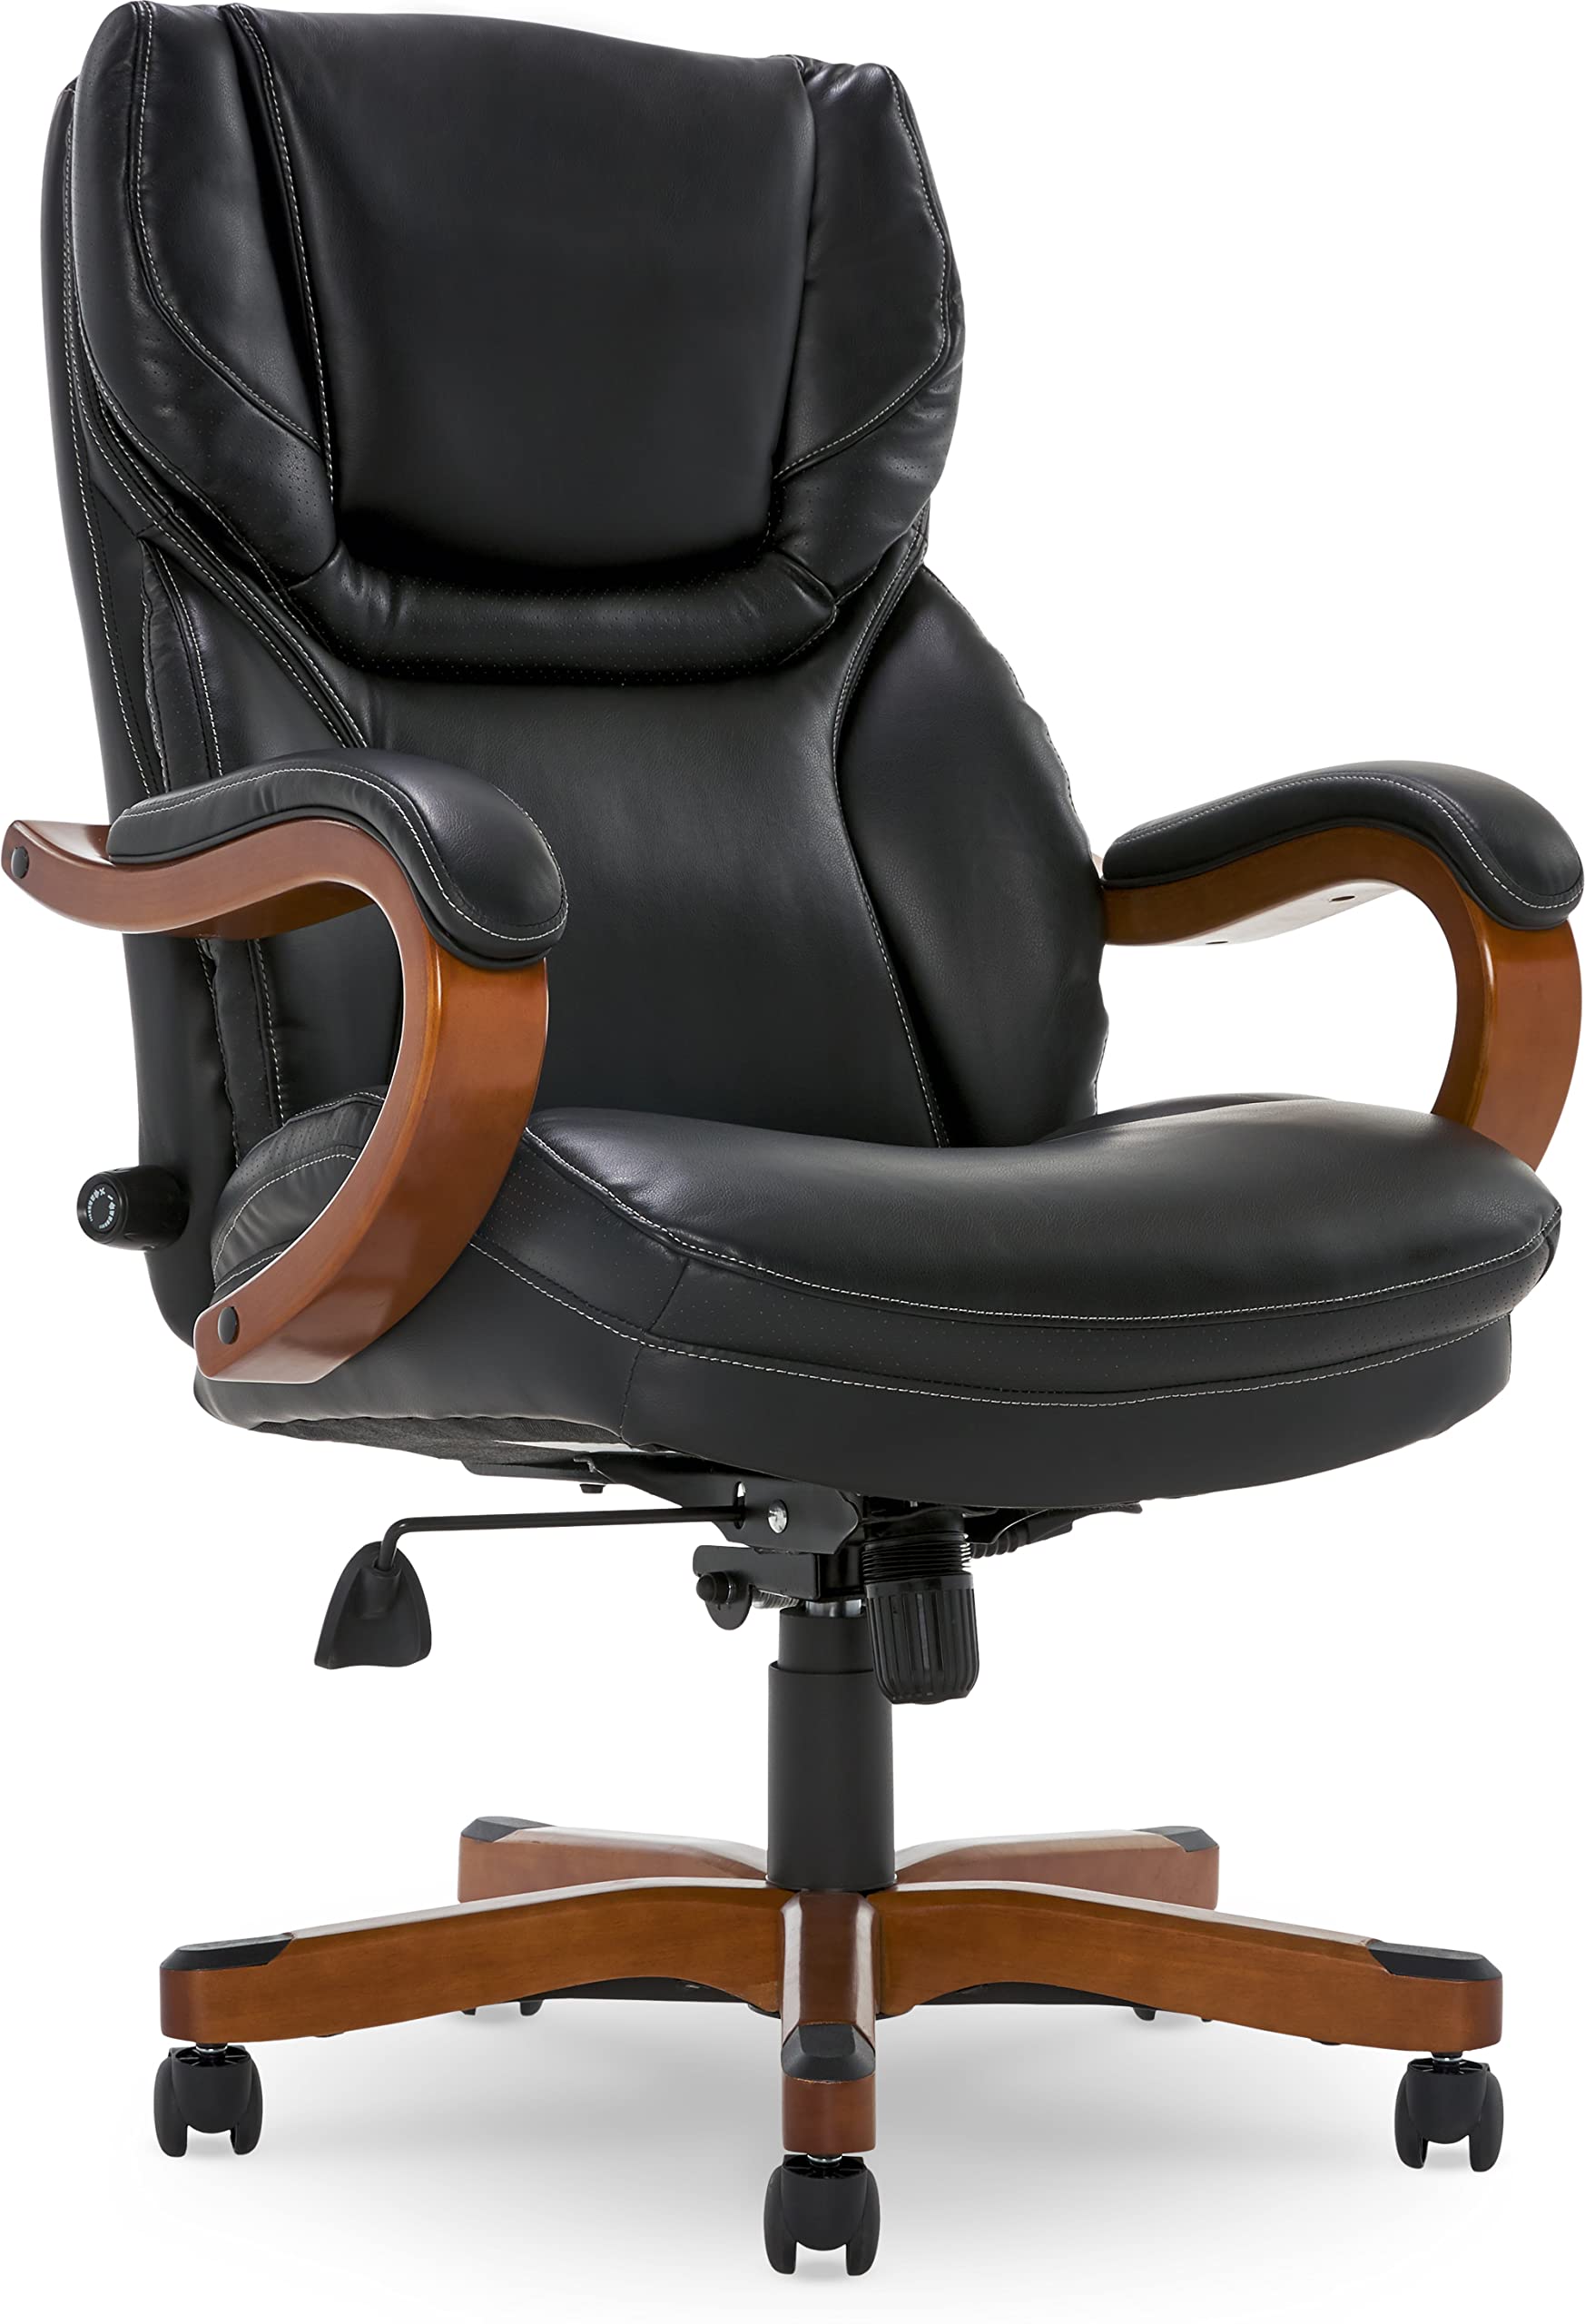 Serta كرسي مكتب تنفيذي كبير وطويل مع لمسات خشبية قابلة للتعديل ومسند ظهر مريح وجلد مستعبدين